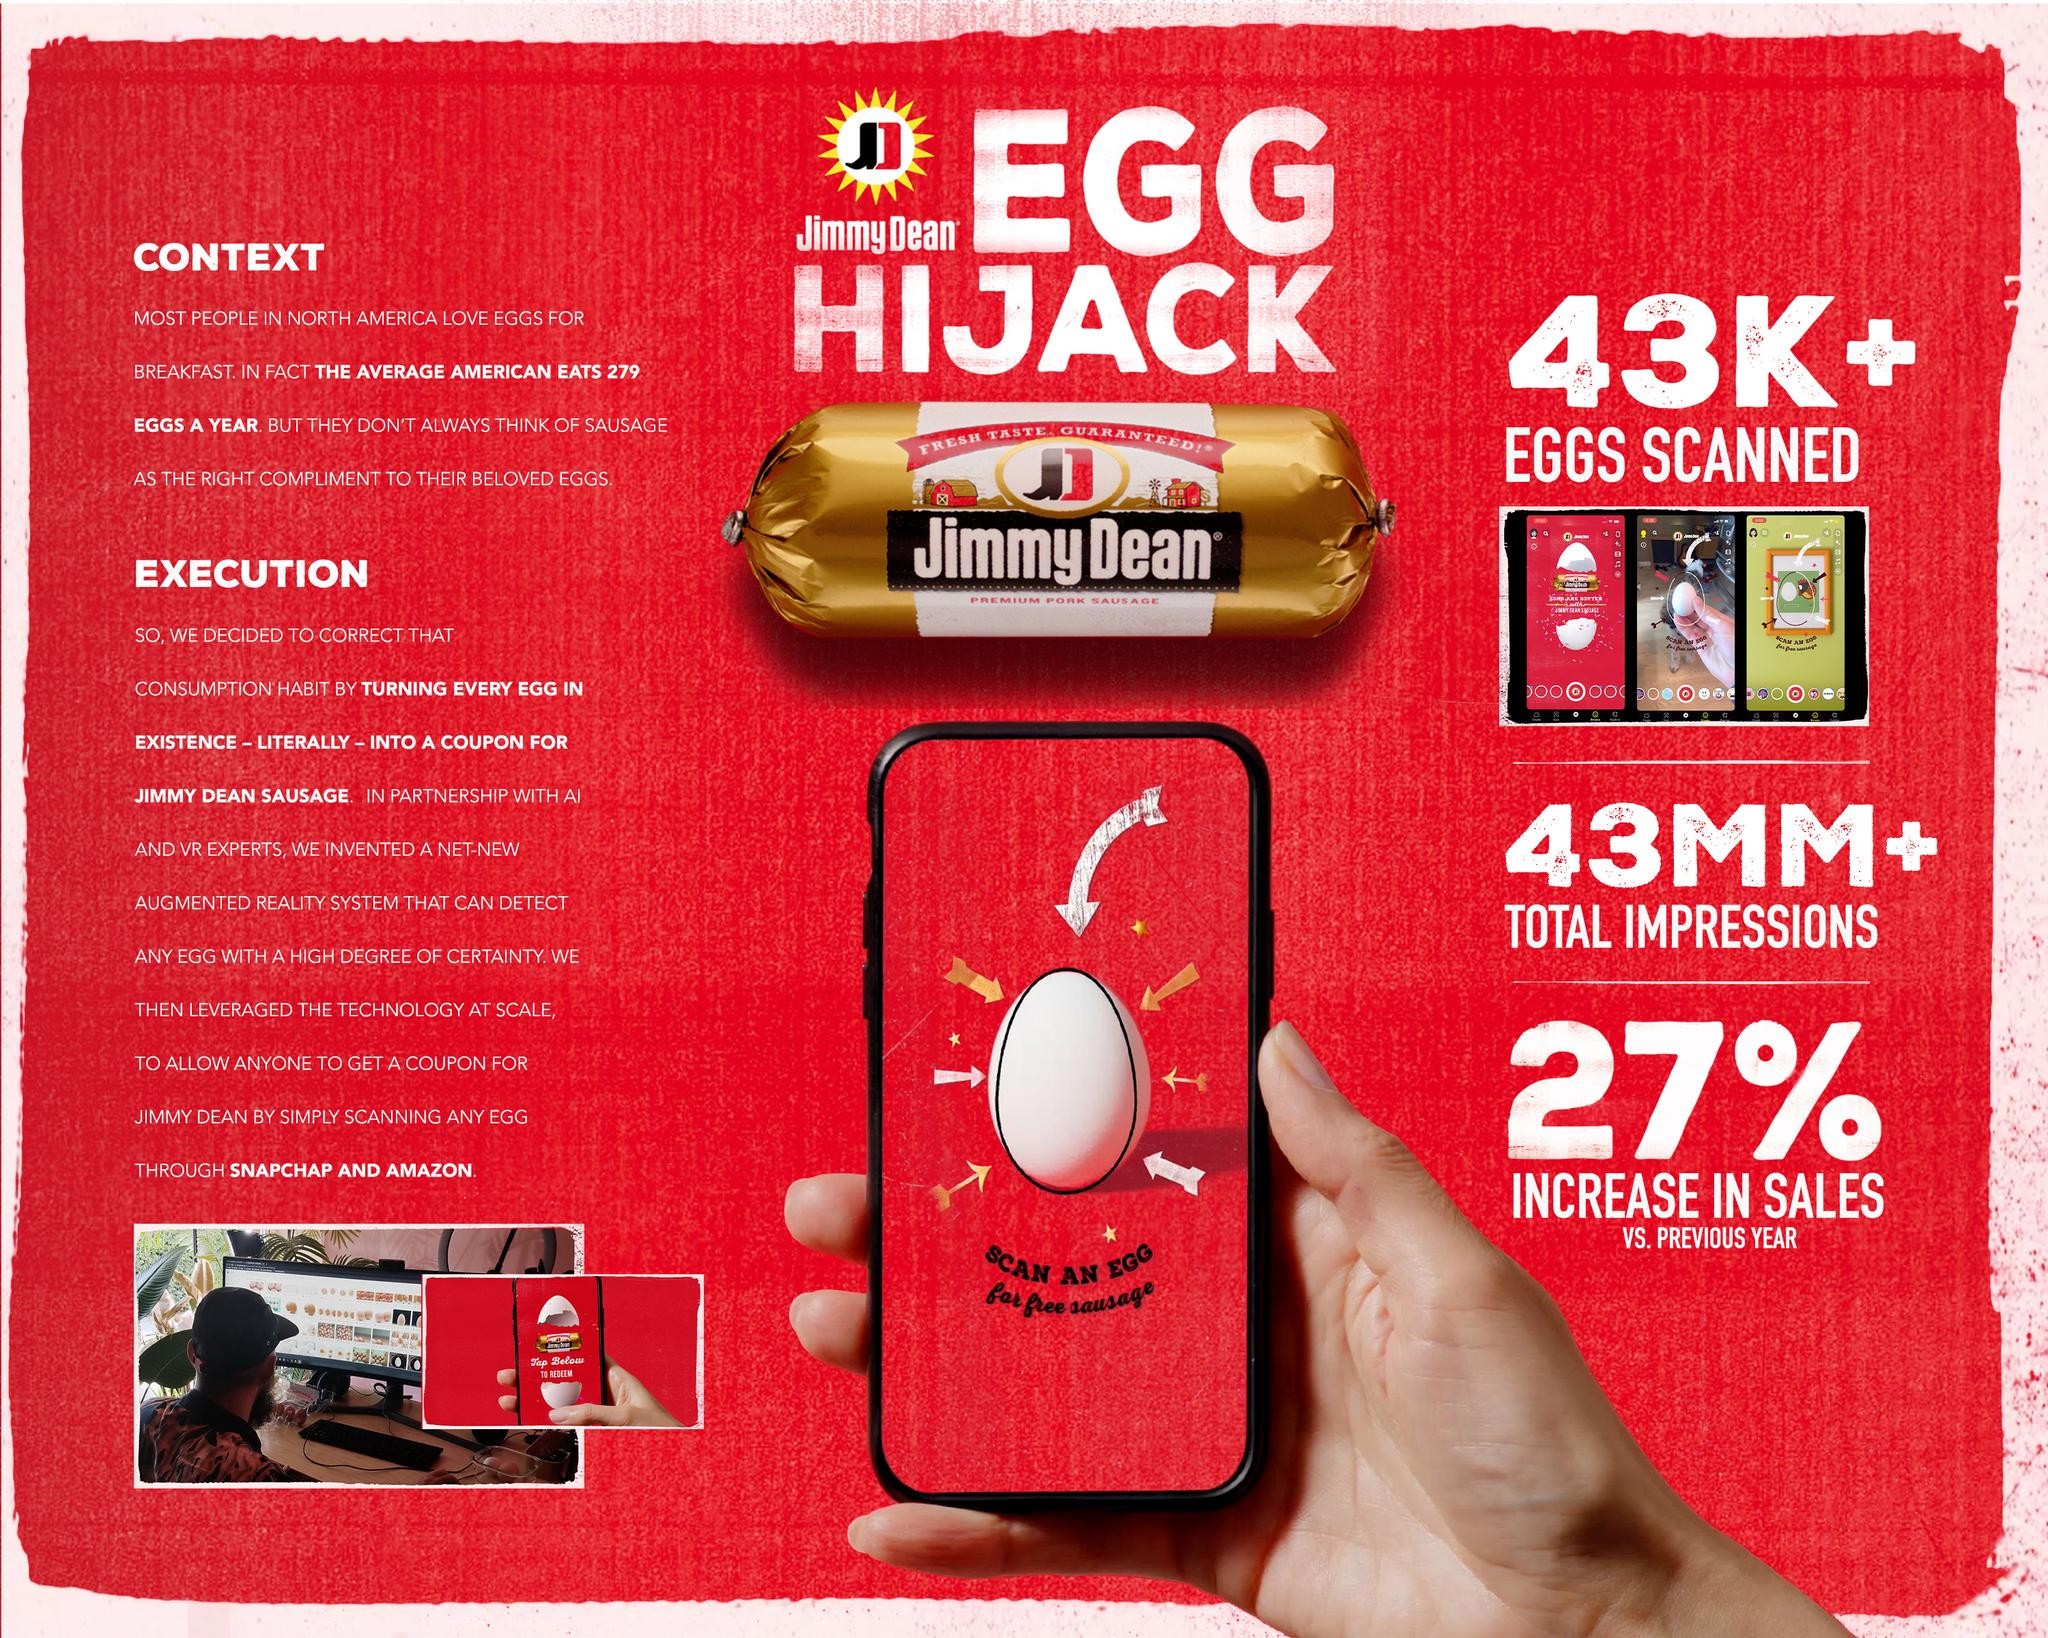 The Egg Hijack